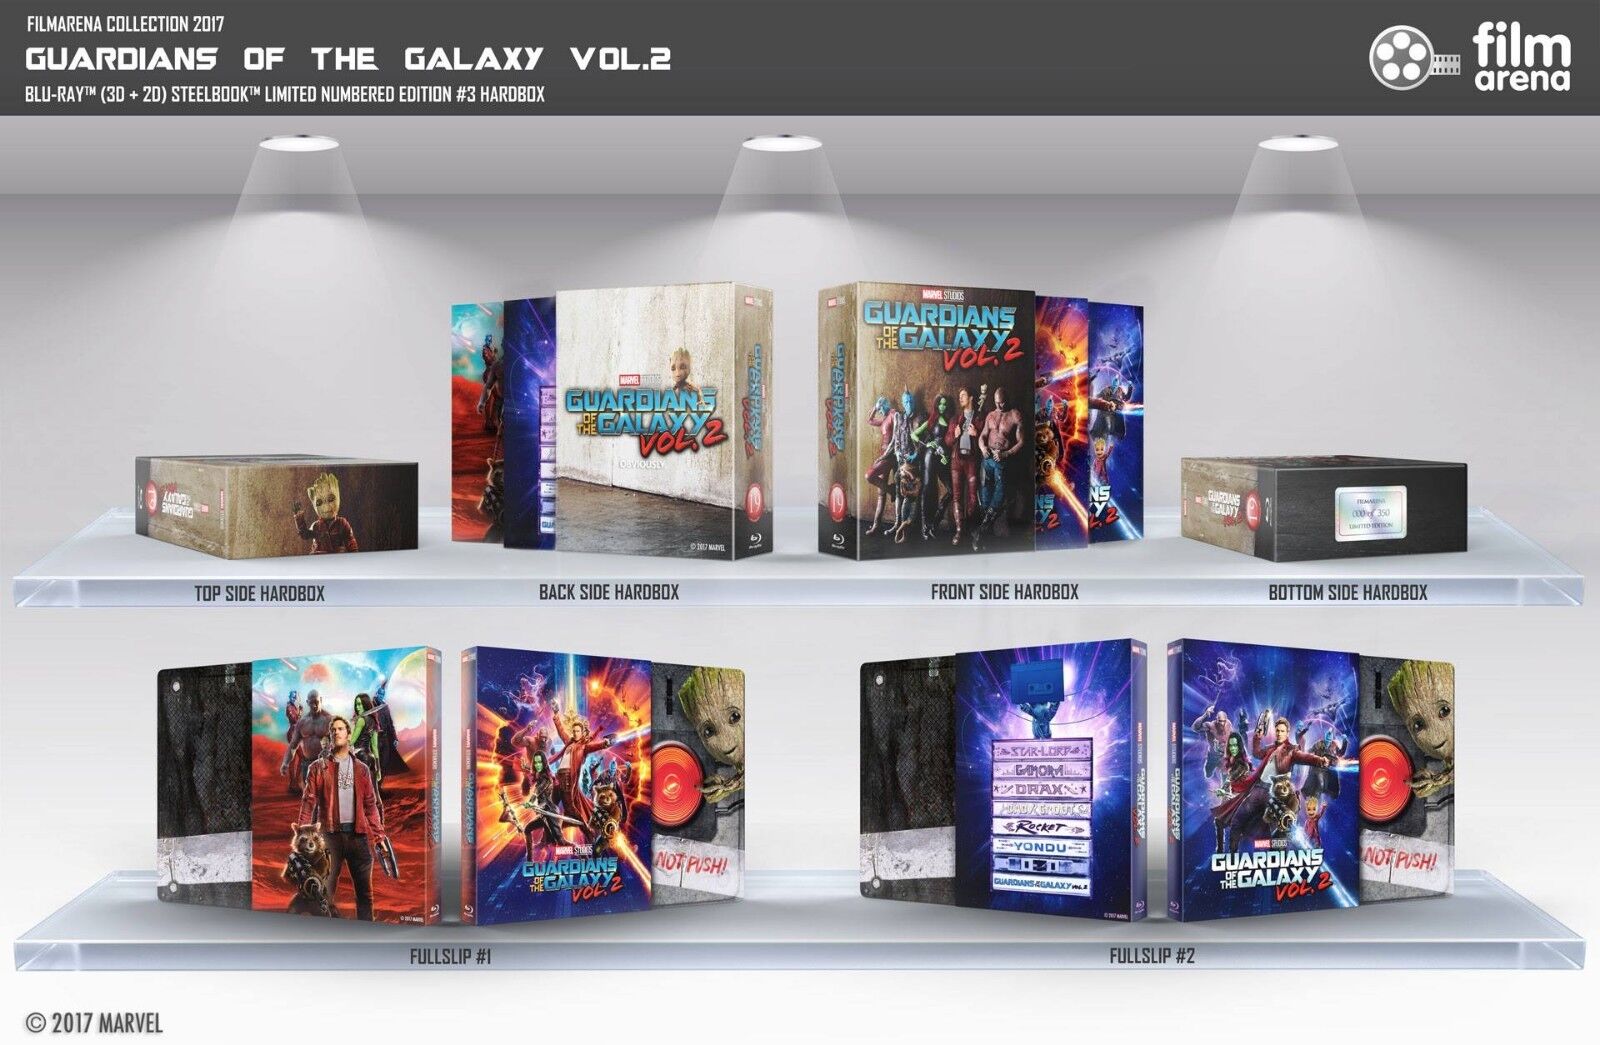 Guardians of the Galaxy Vol. 2 Blu-ray SteelBook Filmarena Collection